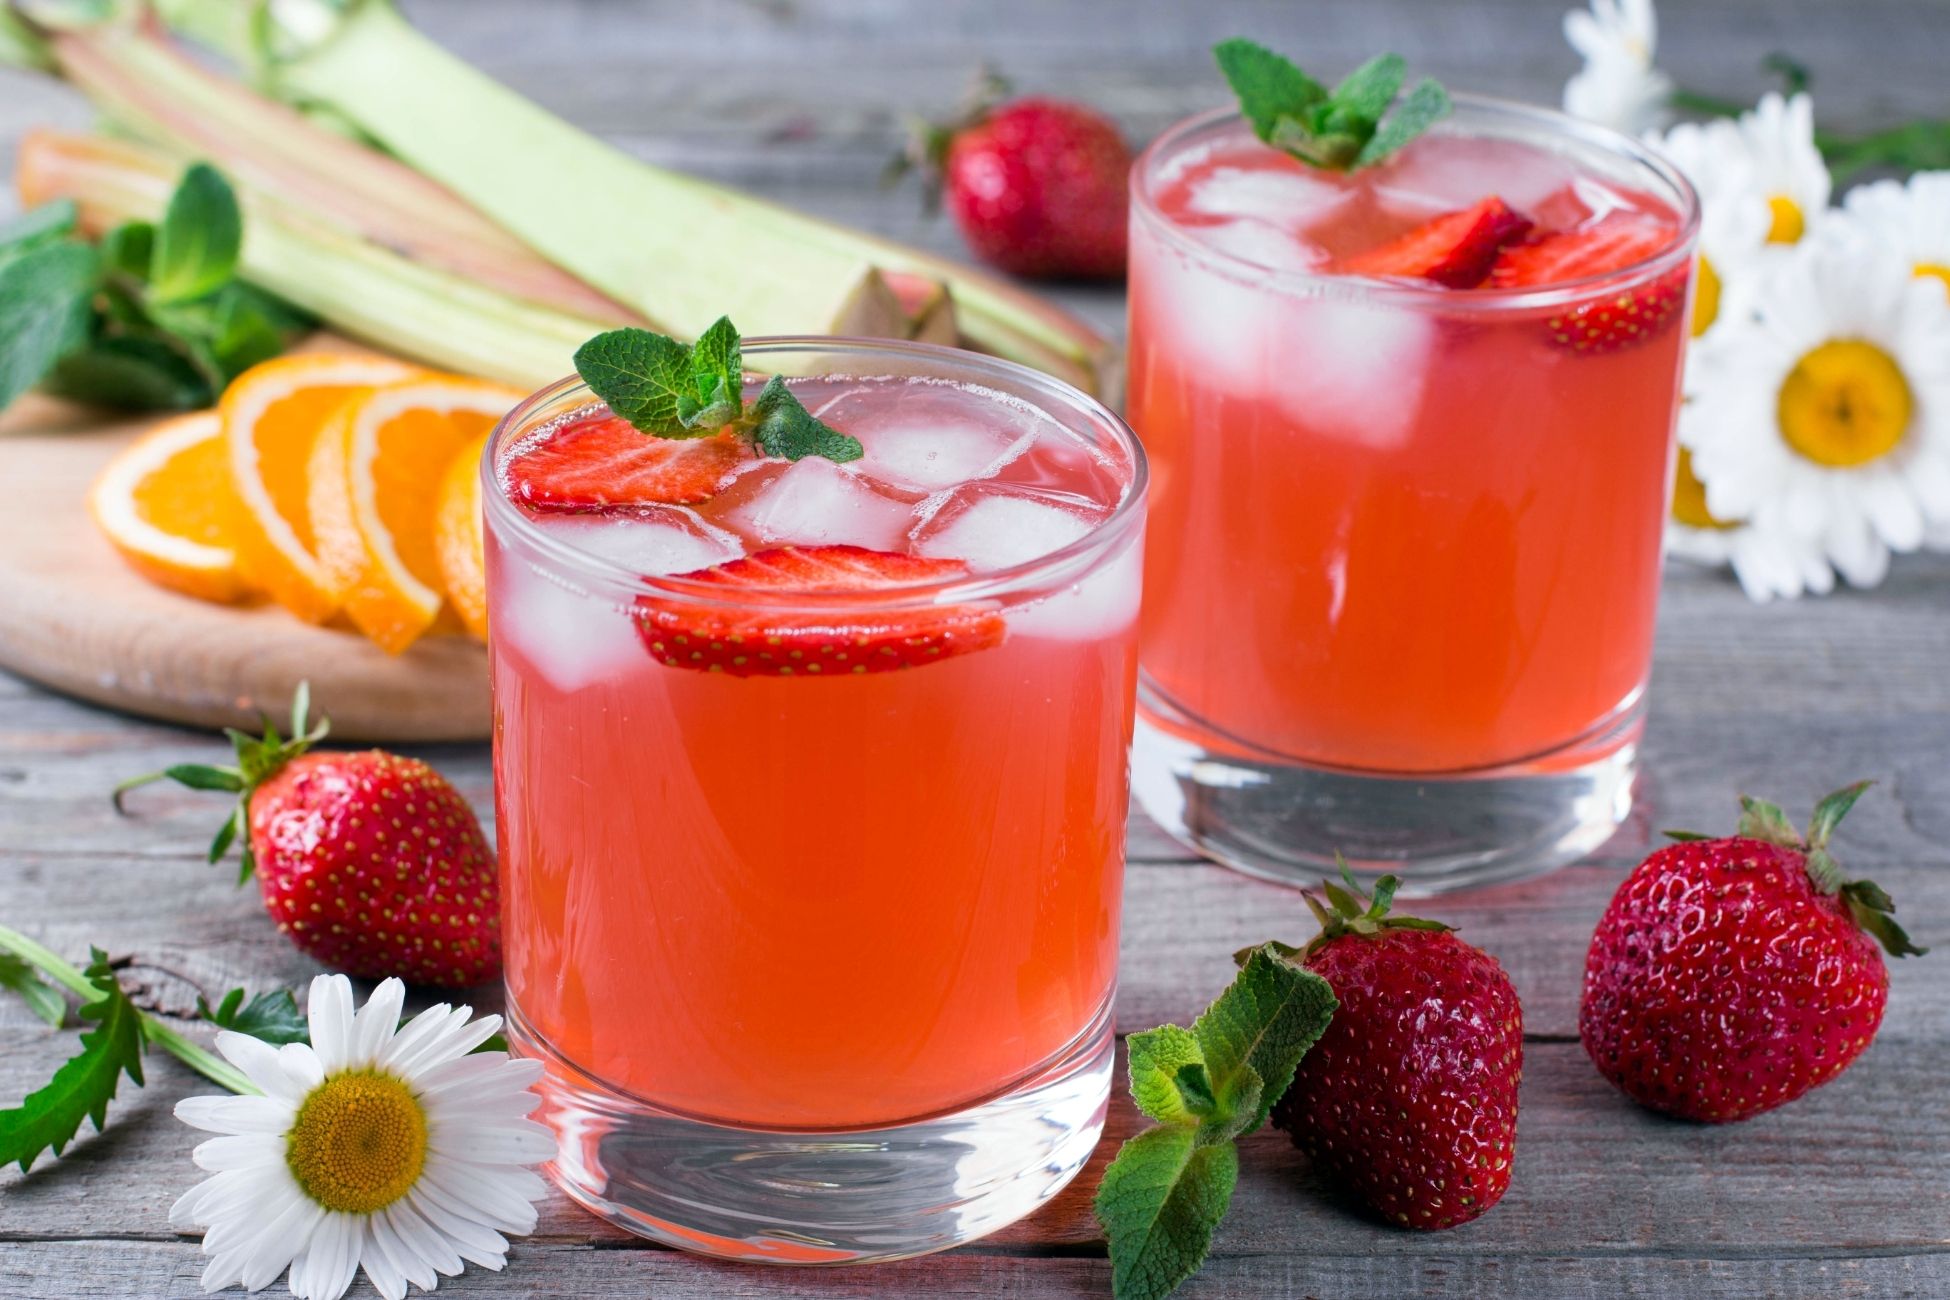 Make Strawberry Lemonade from Scratch